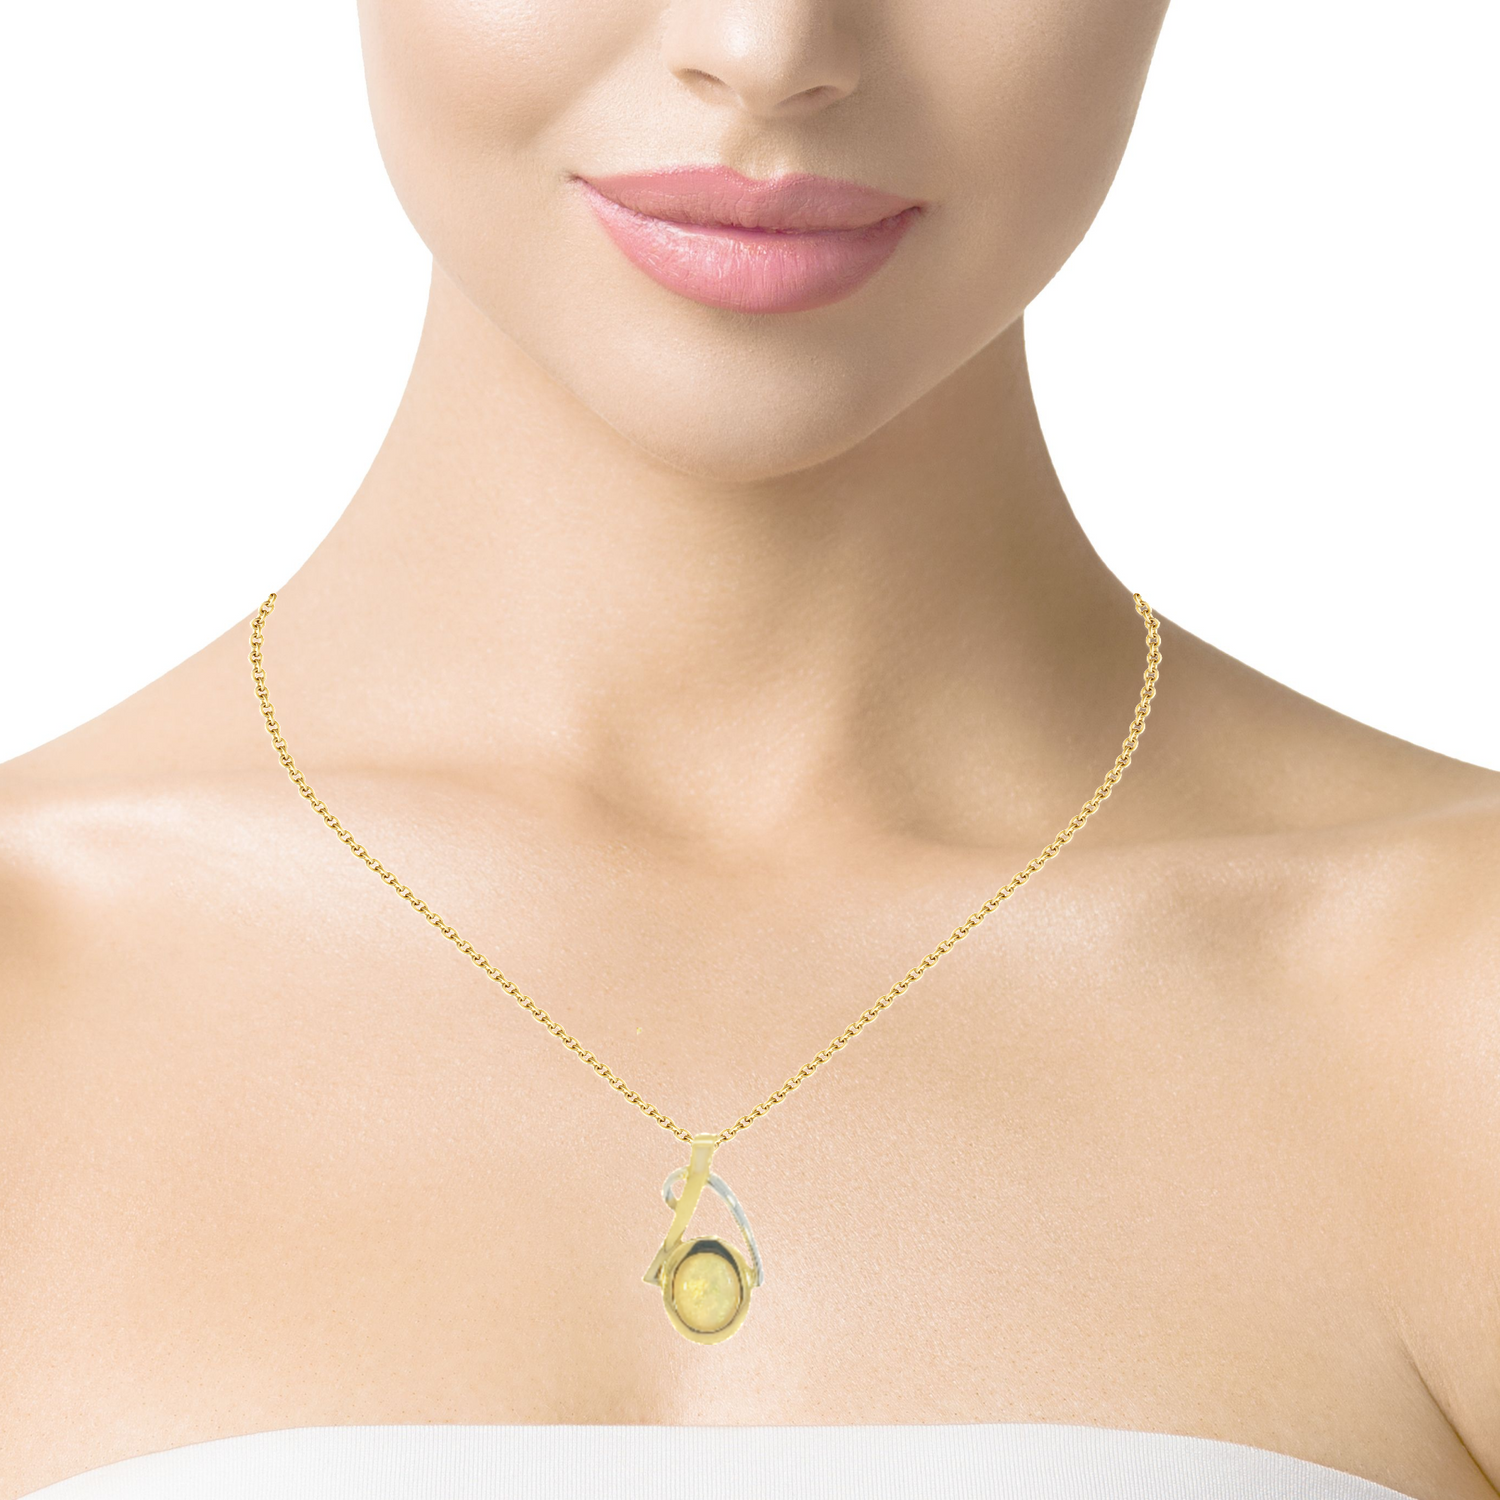 18kt White and Yellow Gold Light Opal 2.5ct pendant - Masterpiece Jewellery Opal & Gems Sydney Australia | Online Shop